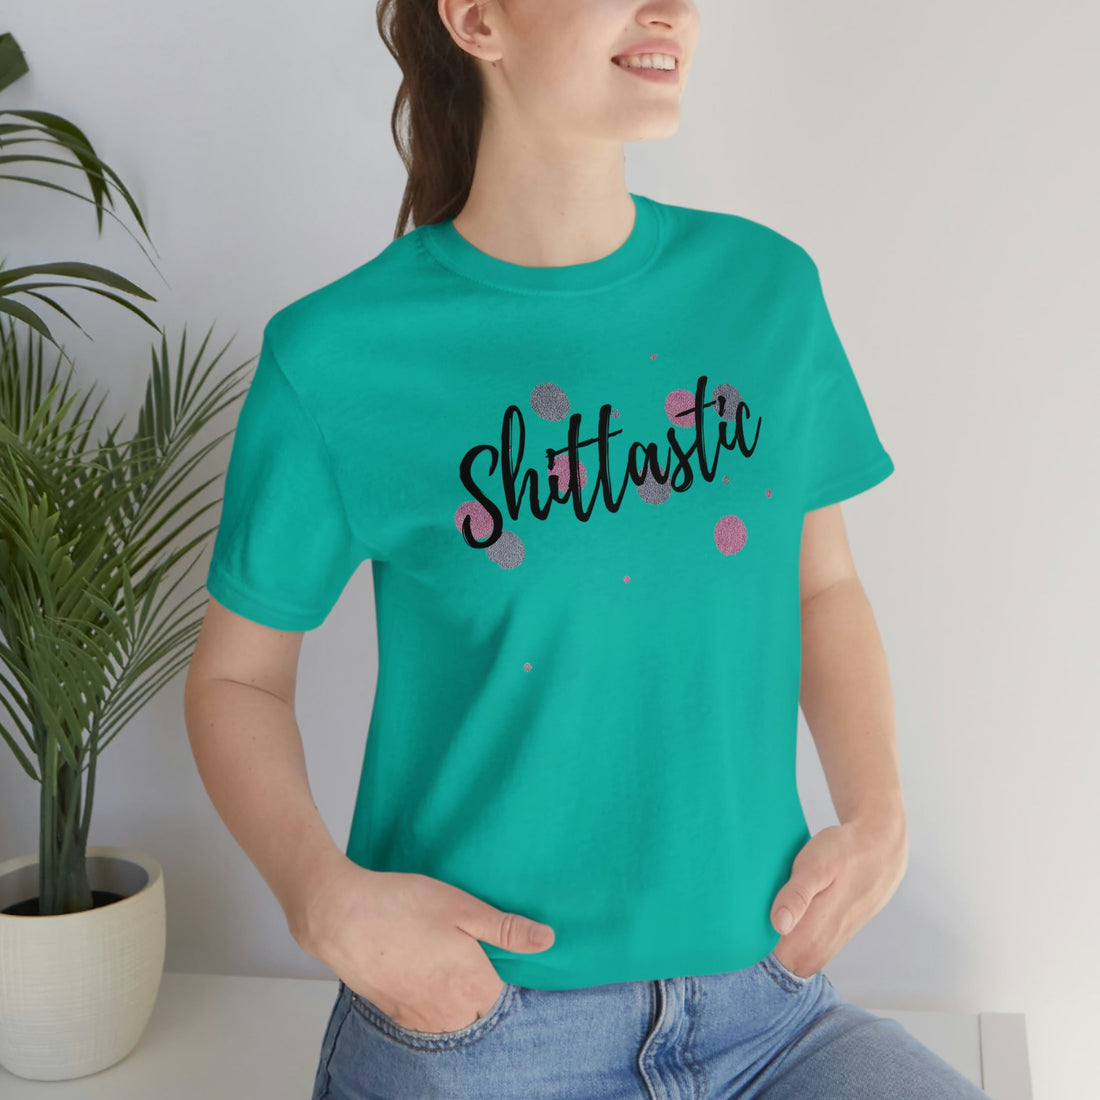 S!36%tatstic - T-Shirt - Positively Sassy - S!36%tatstic